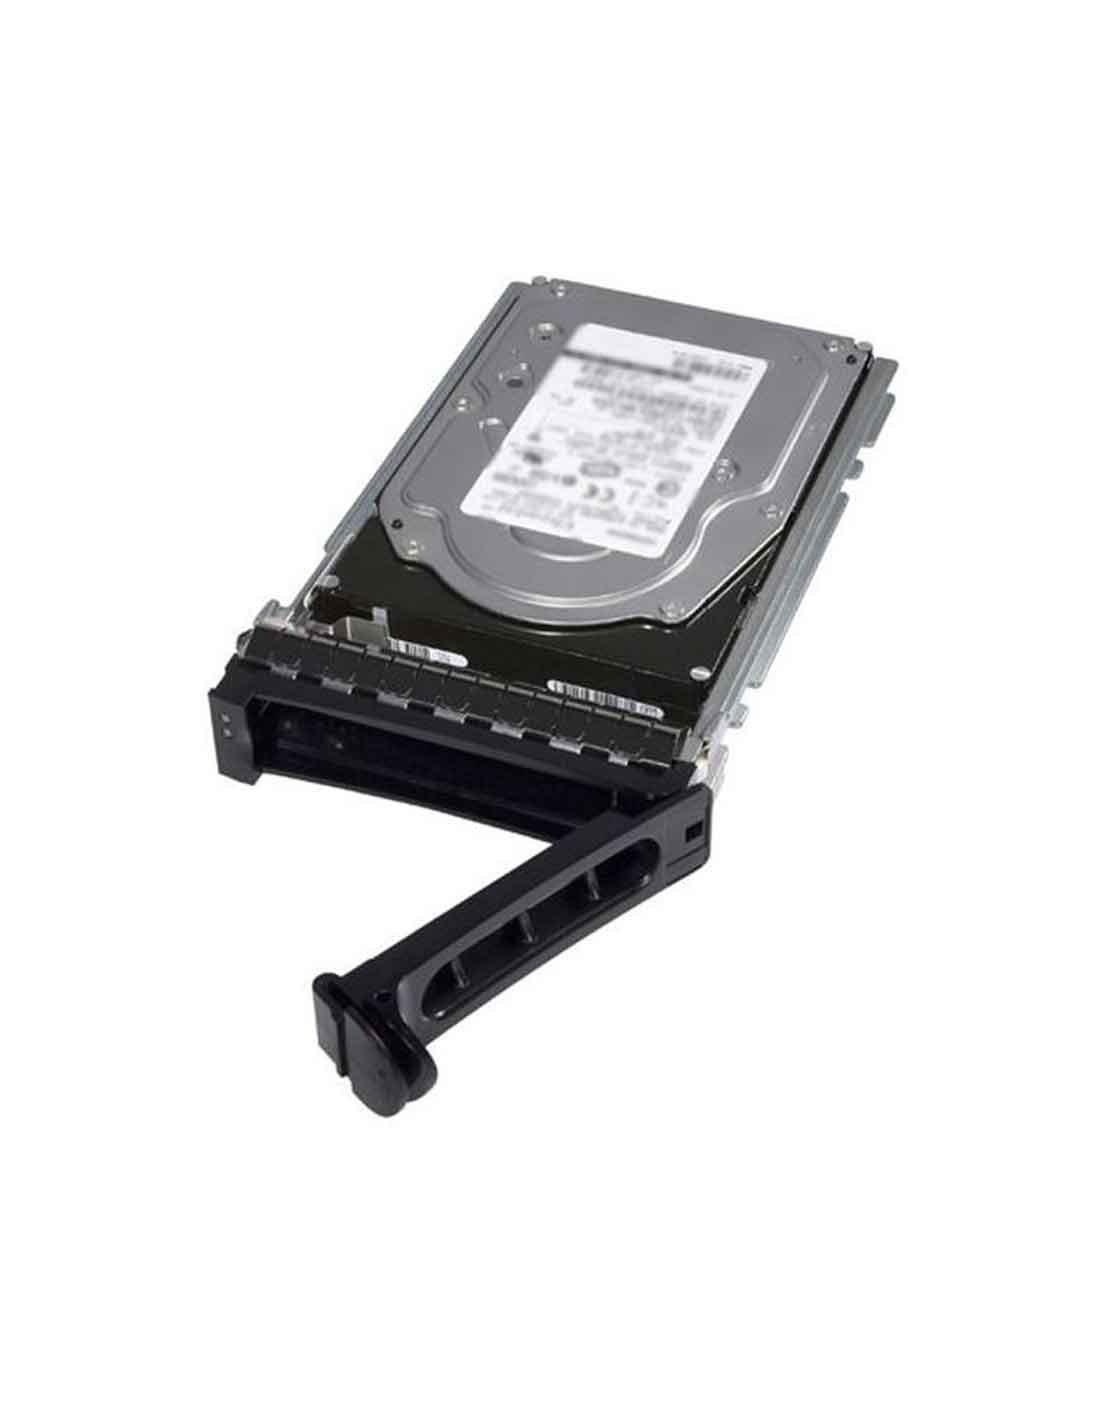 Dell 300GB 10K RPM SAS 2.5in Hot-plug Hard Drive at a cheap price in Dubai online store yaddas karti